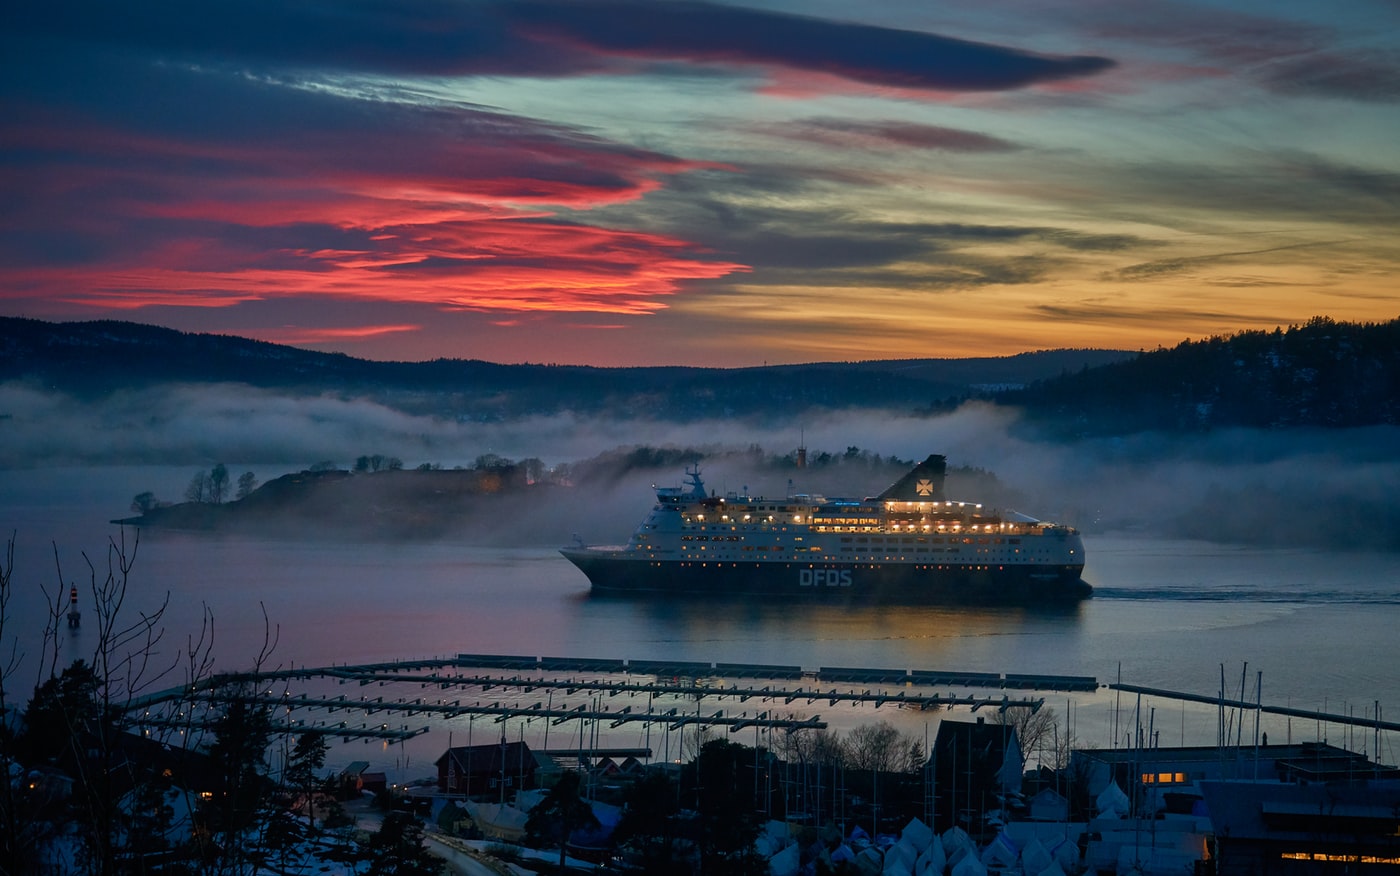 Cruise ship sunset